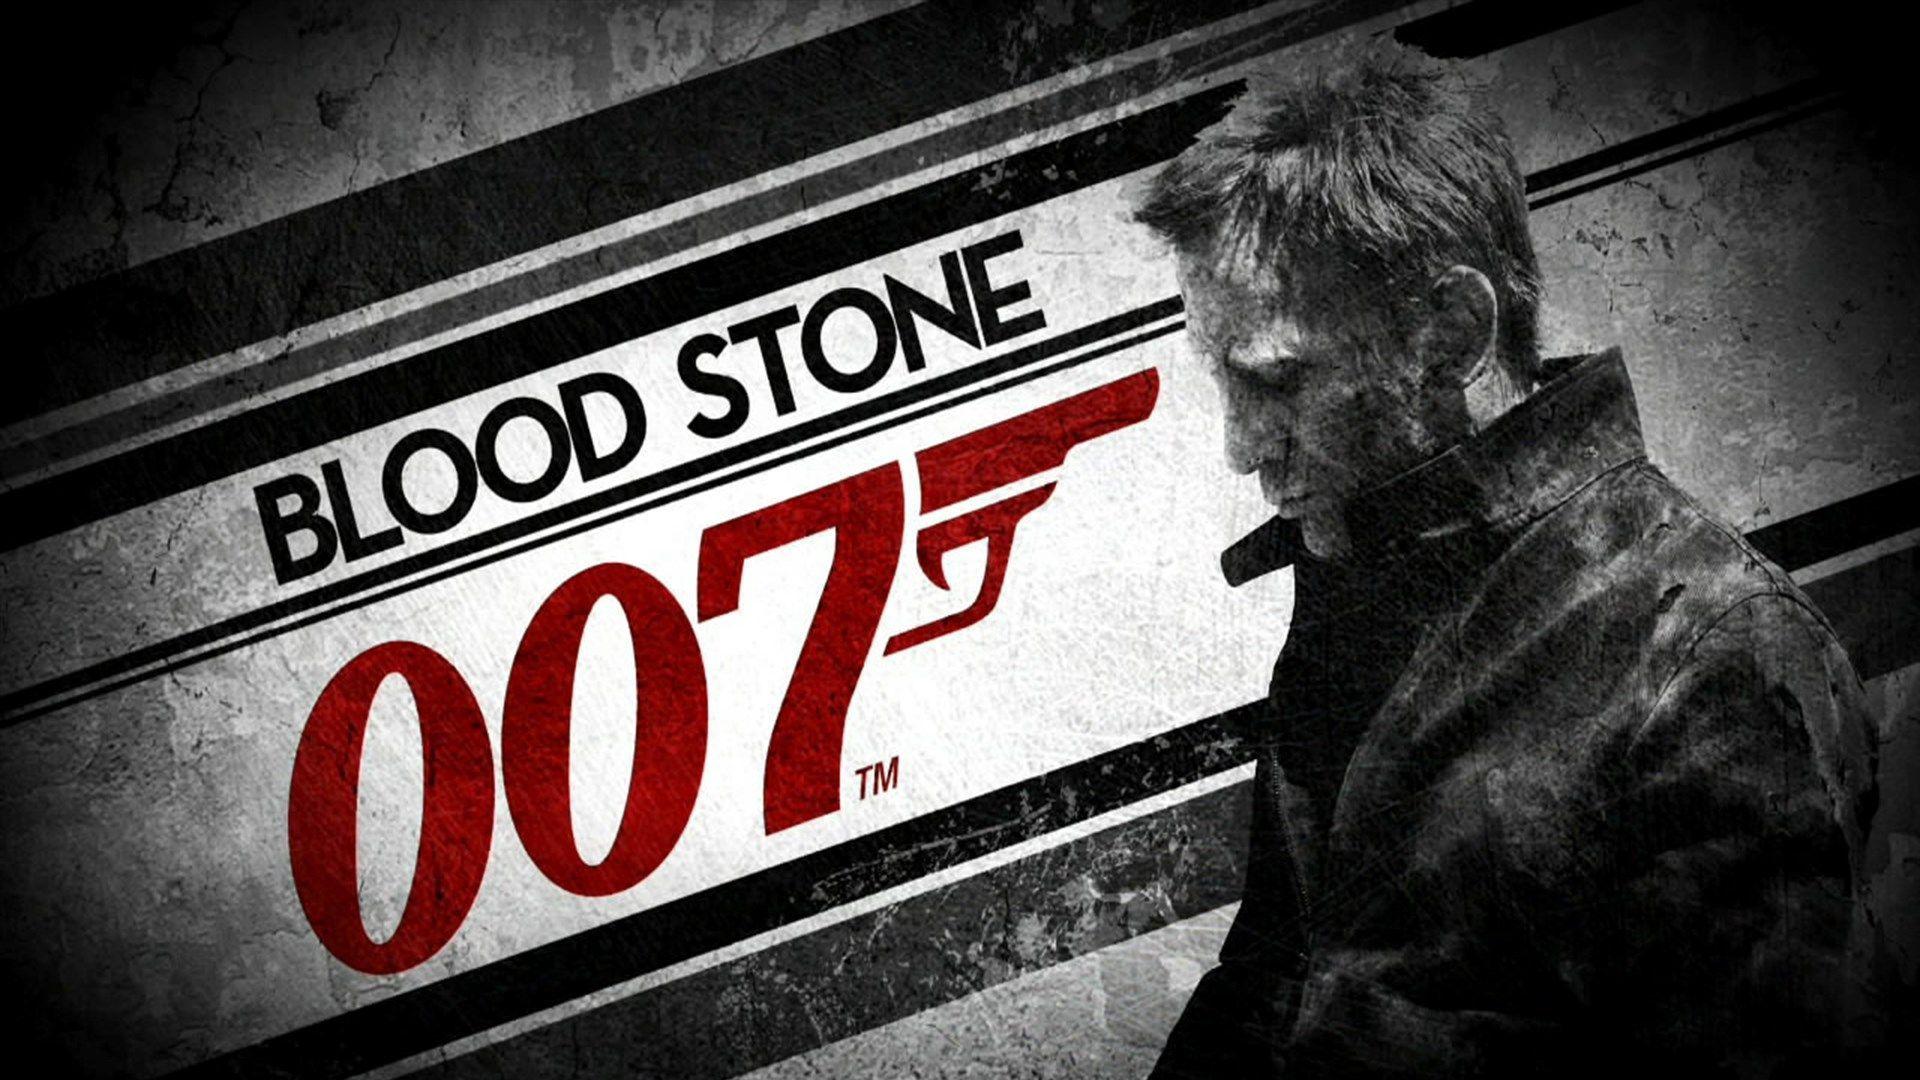 james bond 007 blood stone free desktop wallpaper, 364 kB